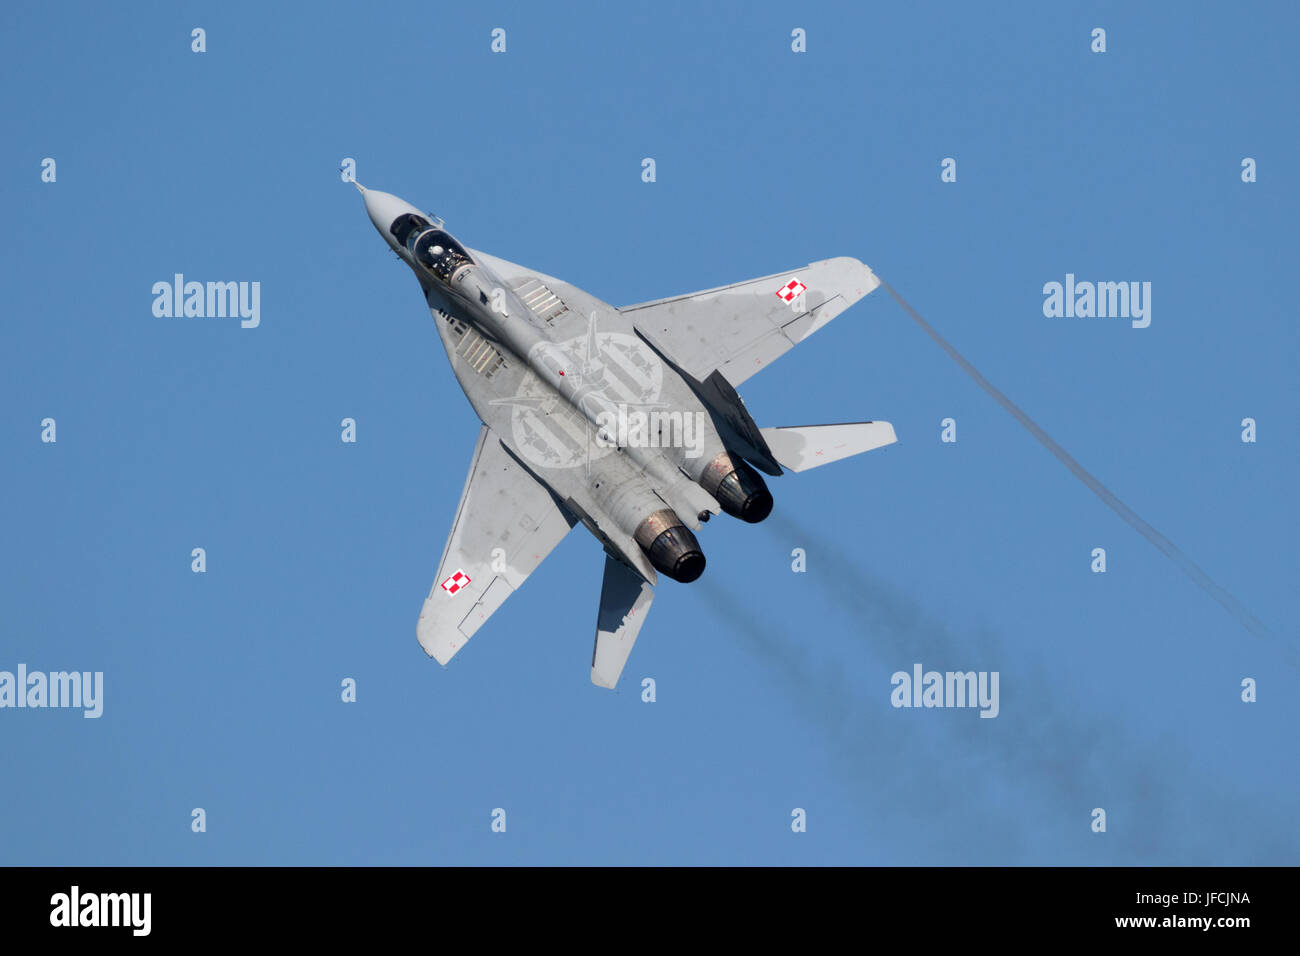 Florennes, Bélgica - 15 jun, 2017: la fuerza aérea polaca jet de combate MIG-29 Fulcrum sobrevolar la base aérea florennes. Foto de stock